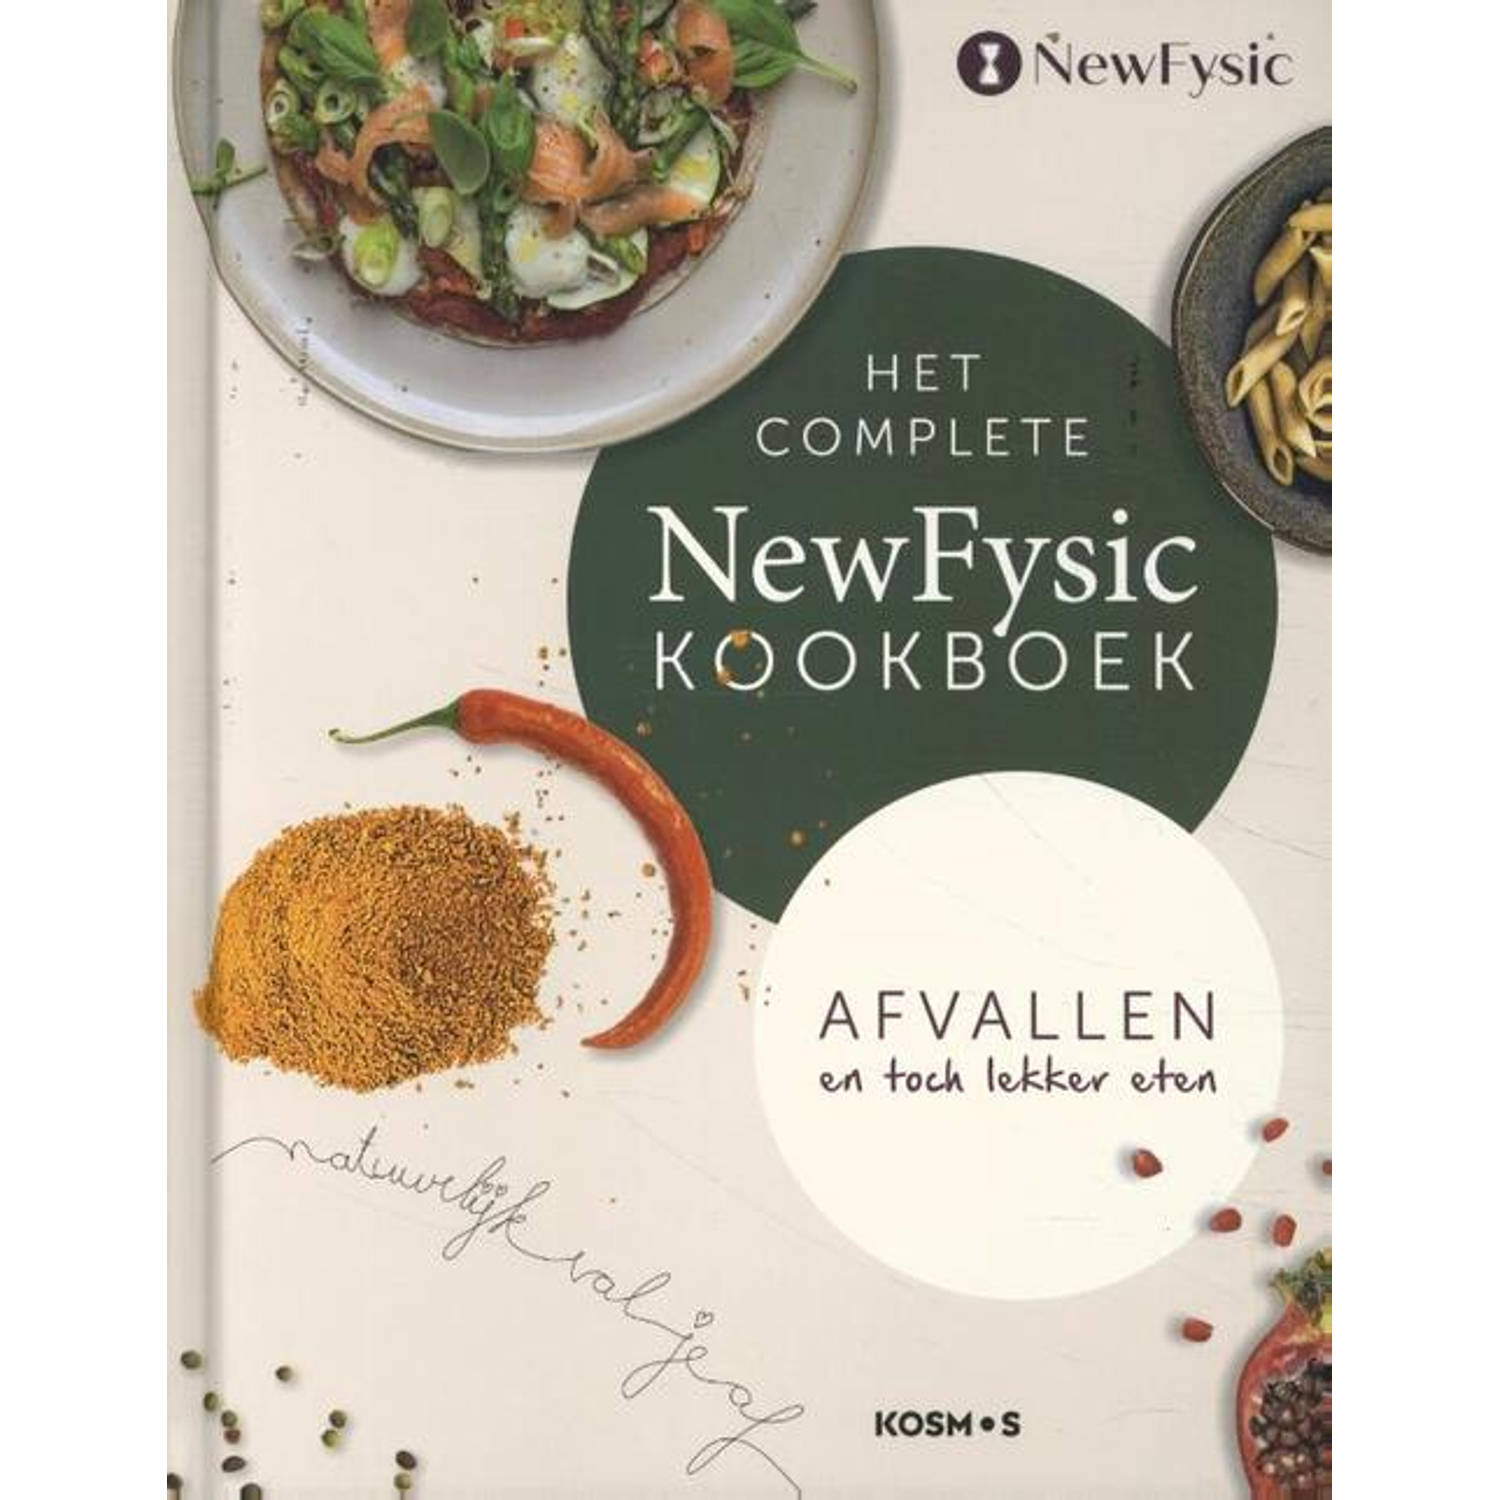 Het Complete Newfysic Kookboek